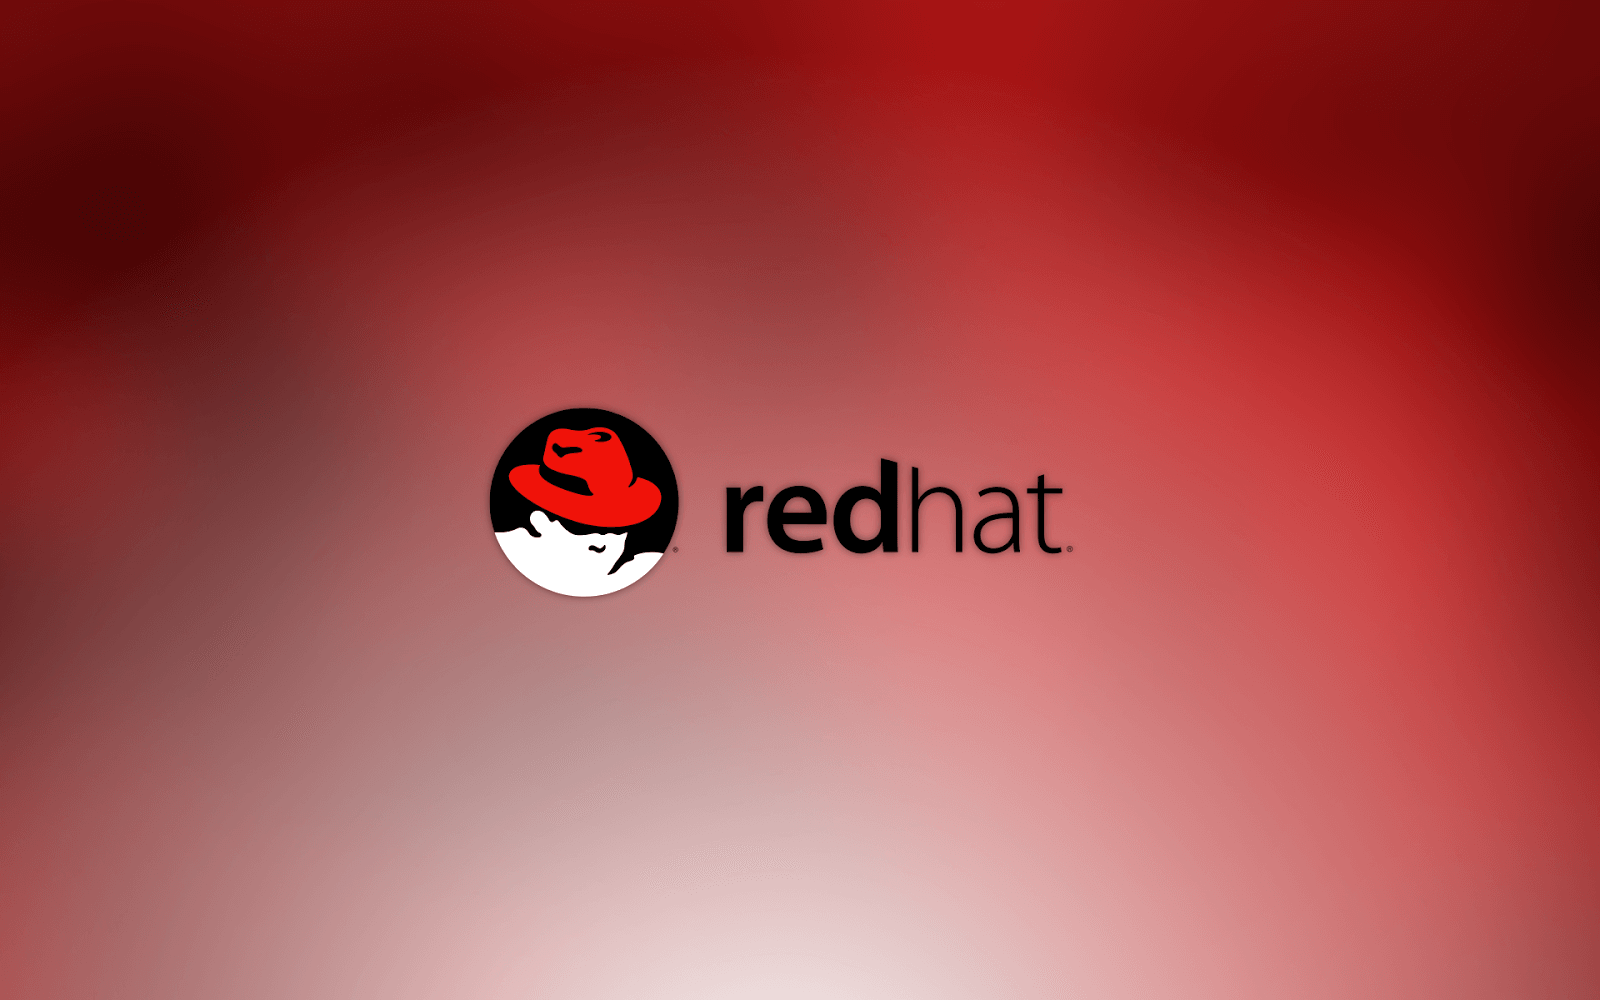 Red Hat Enterprise Linux chega ao Windows 10 como WLinux Enterprise